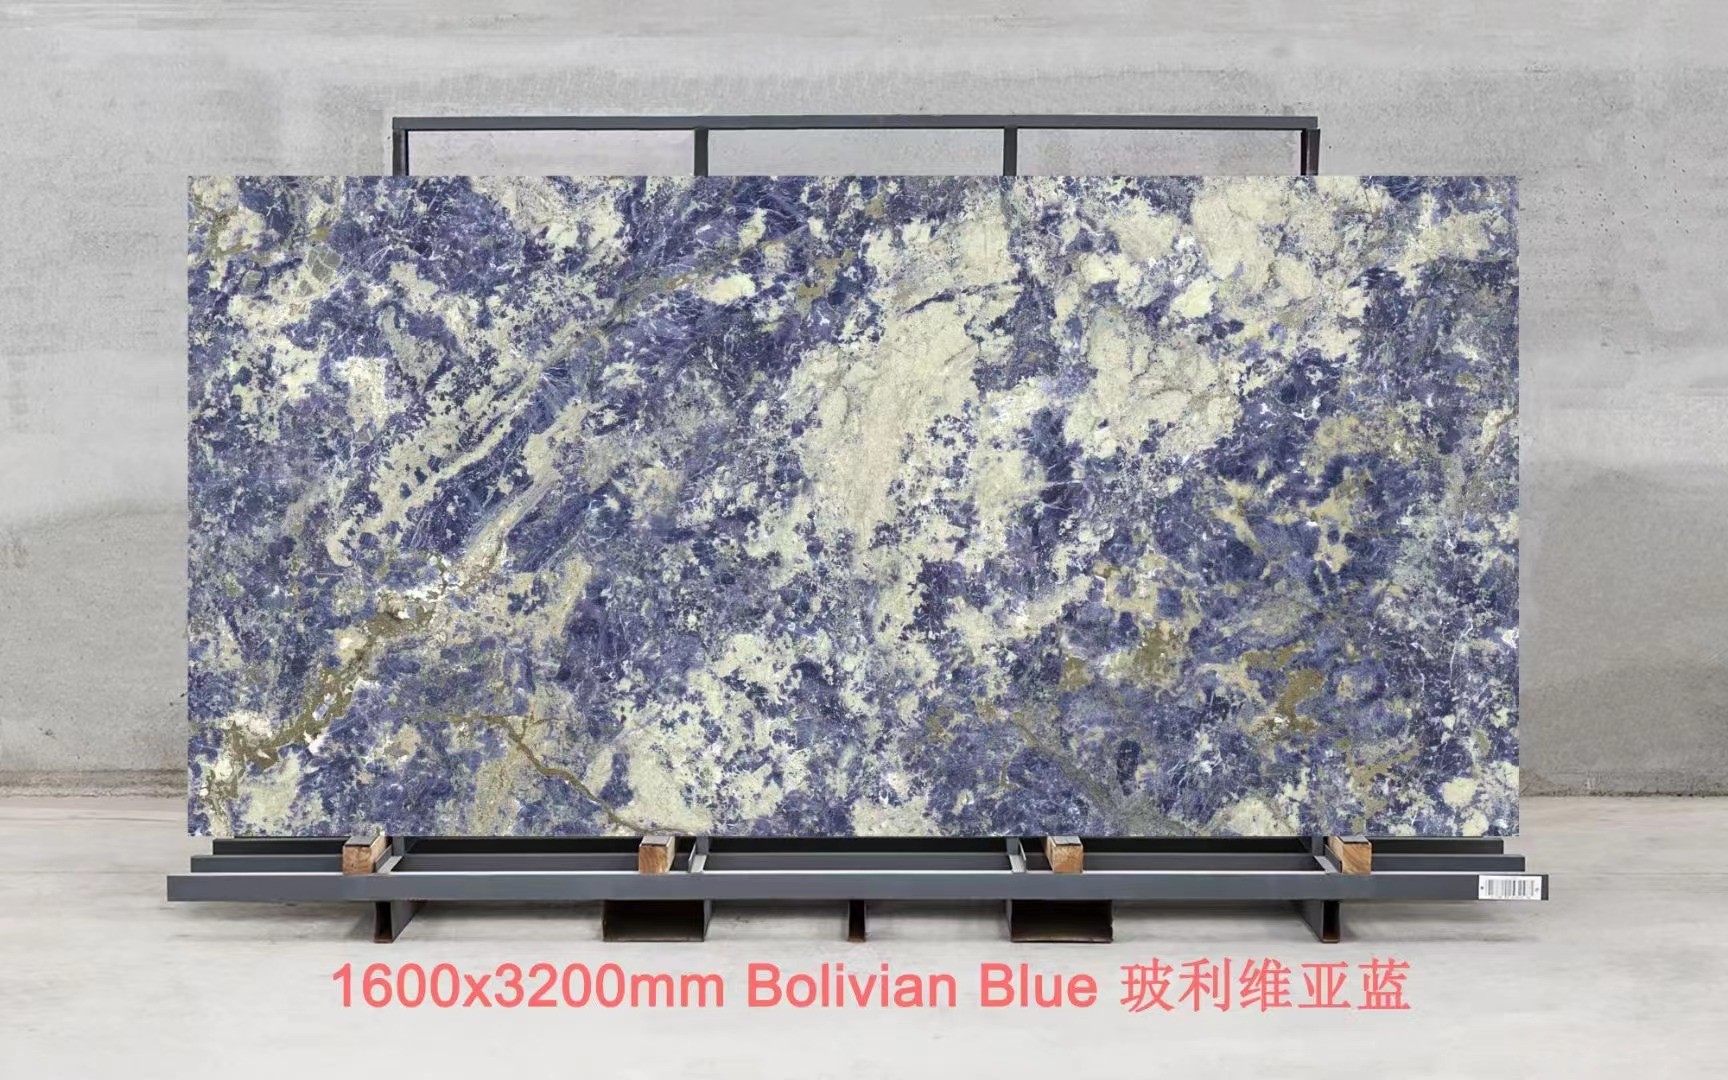 1600x3200mm Bolivian Blue Sintered Stone